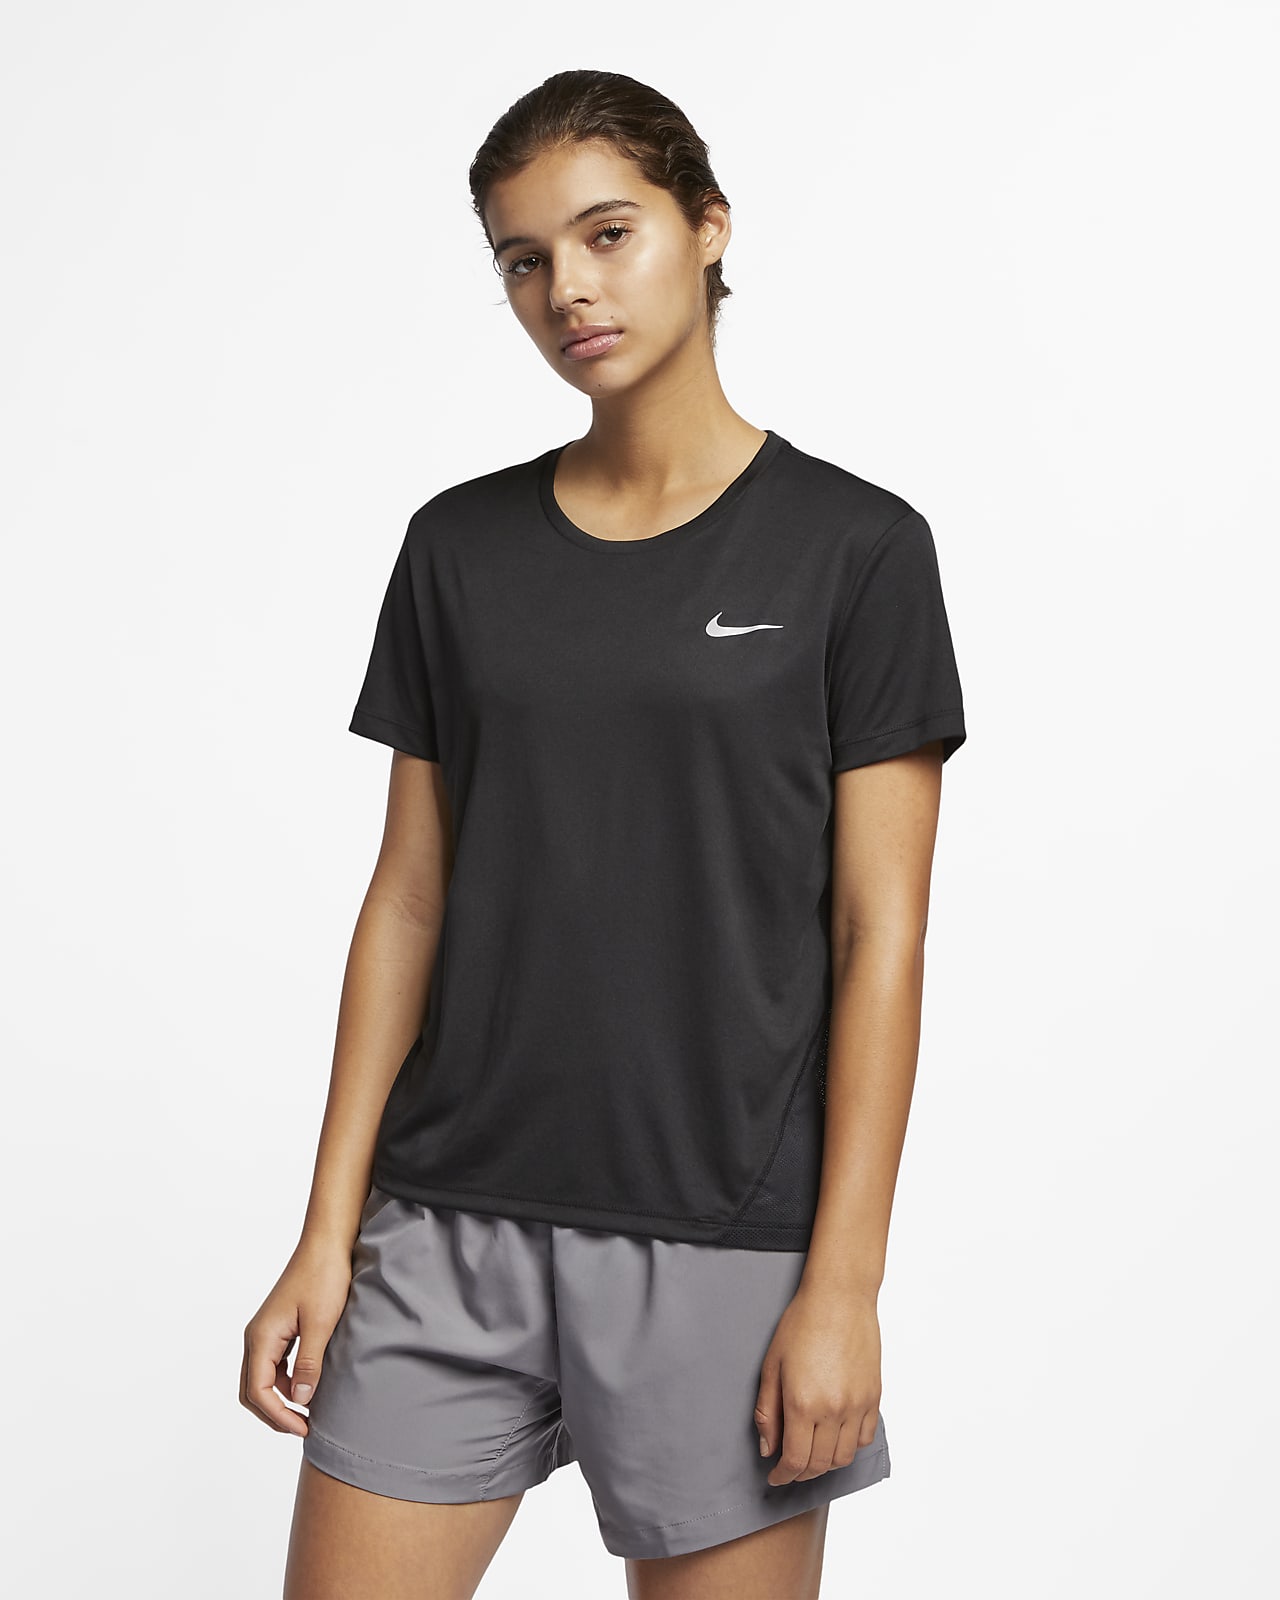 Aditivo microscópico Reciclar Nike Miler Camiseta de running de manga corta - Mujer. Nike ES